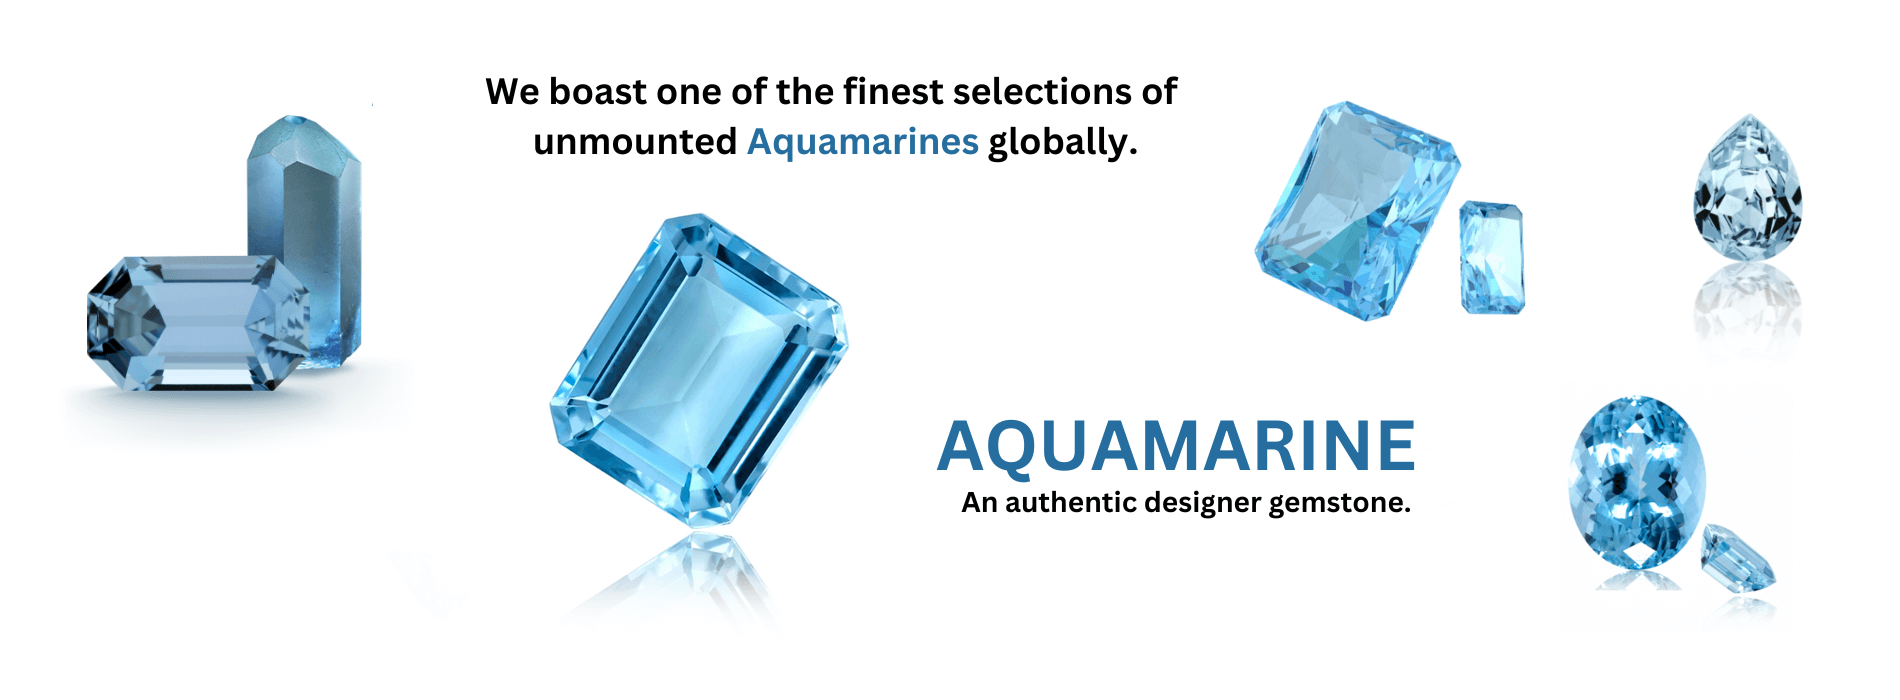 We offer the best quality Aquamarine